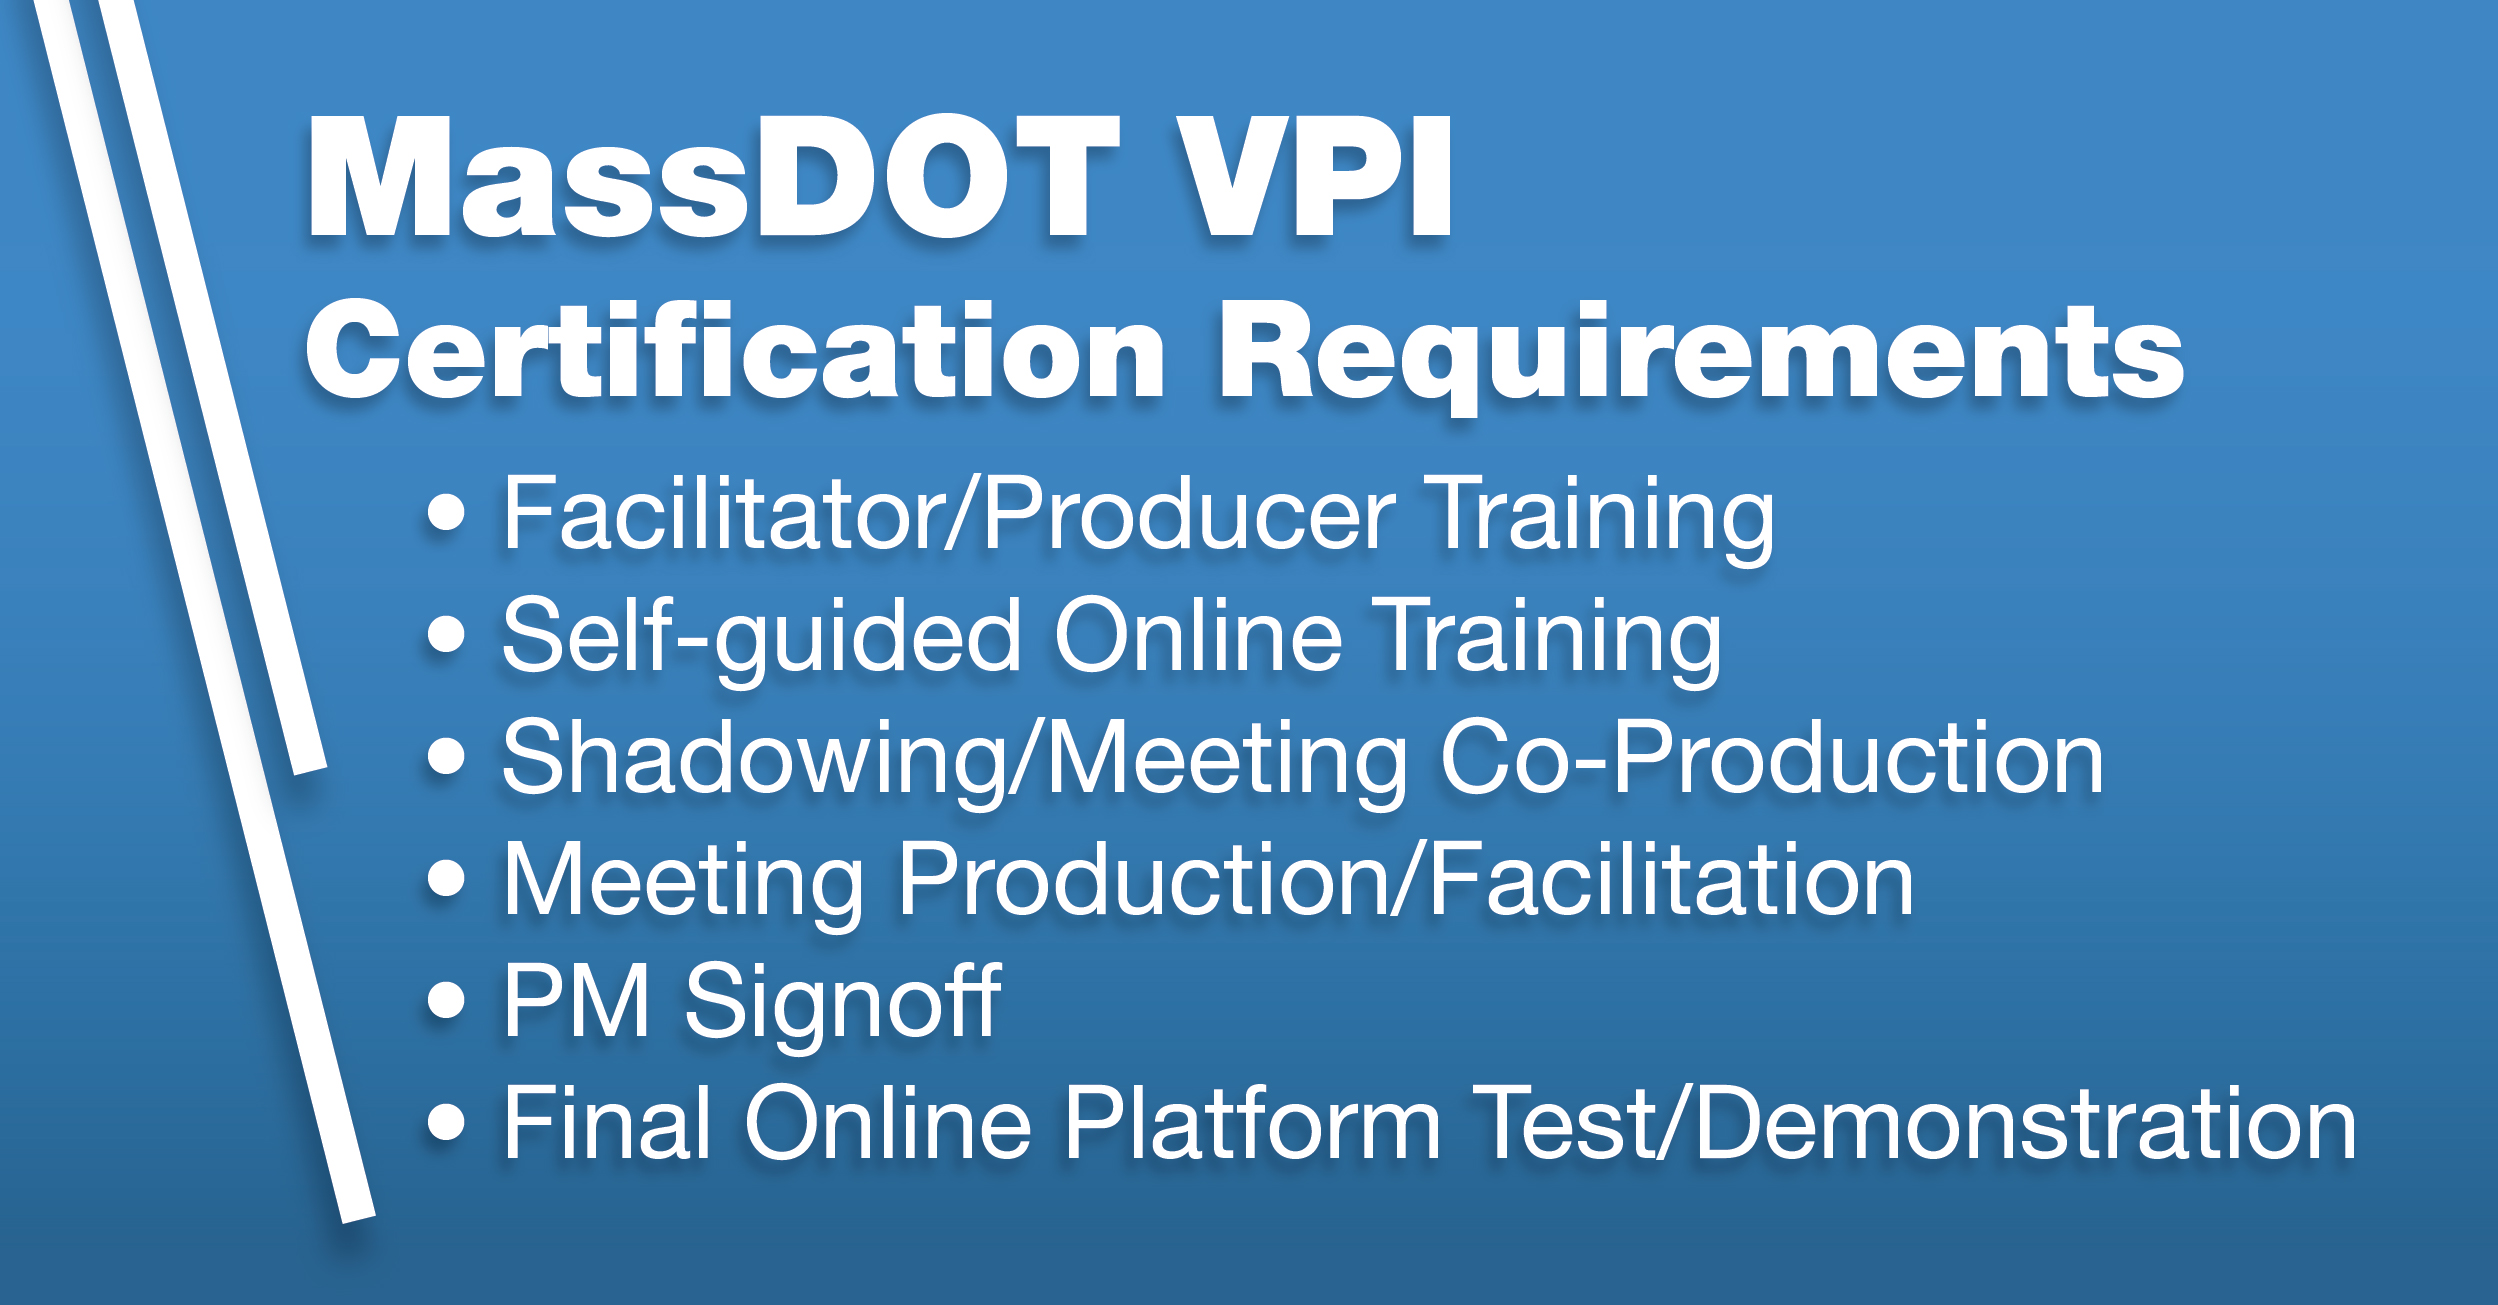 MassDOT VPI Certification Requirements:
Facilitator/Producer Training, Self-Guided Online Training, Shadowing/Meeting Co-Production, Meeting Production/Facilitation, PM Signoff, Final Online Platform Test/Demonstration